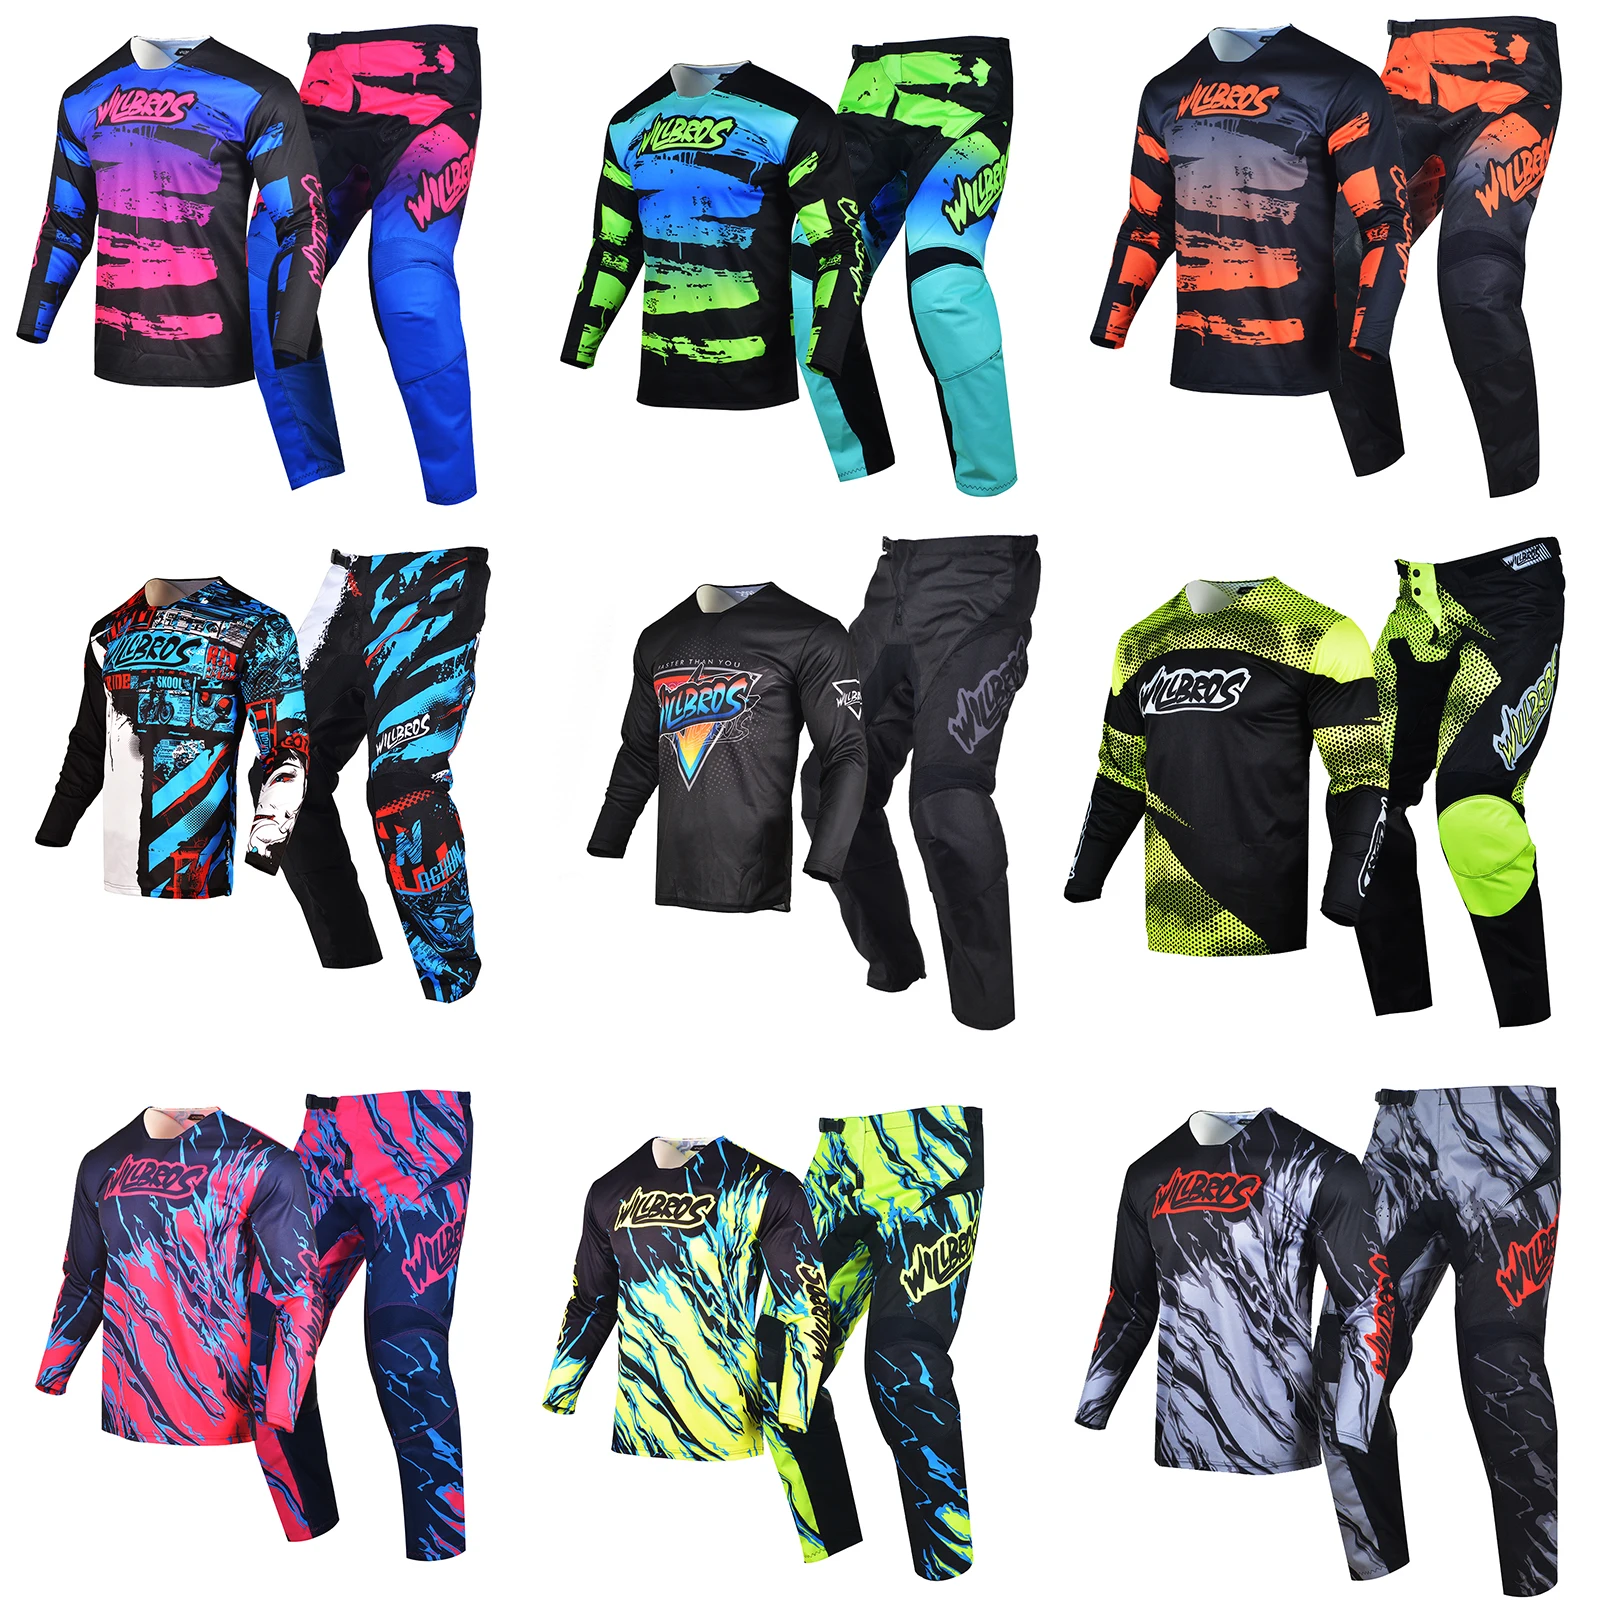 MX MTB Dirt Bike Gear Set Motocross Jersey Pants Combo Willbros Enduro Outfit Dirtbike Suit Moto Cross Cycling Kits For Men enlarge